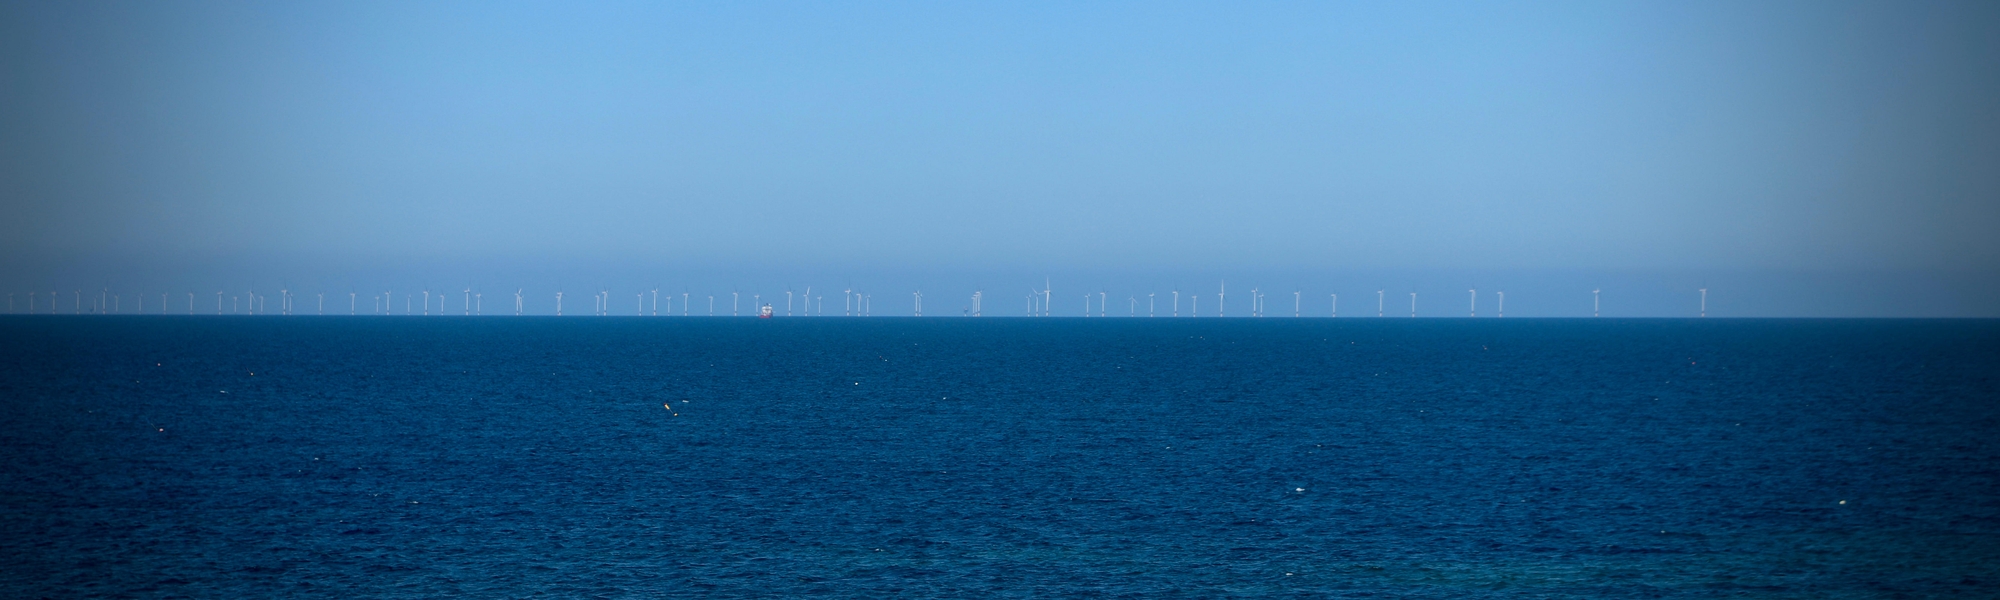 Sheringham Shoal offshore wind farm seen from Sheringham. 